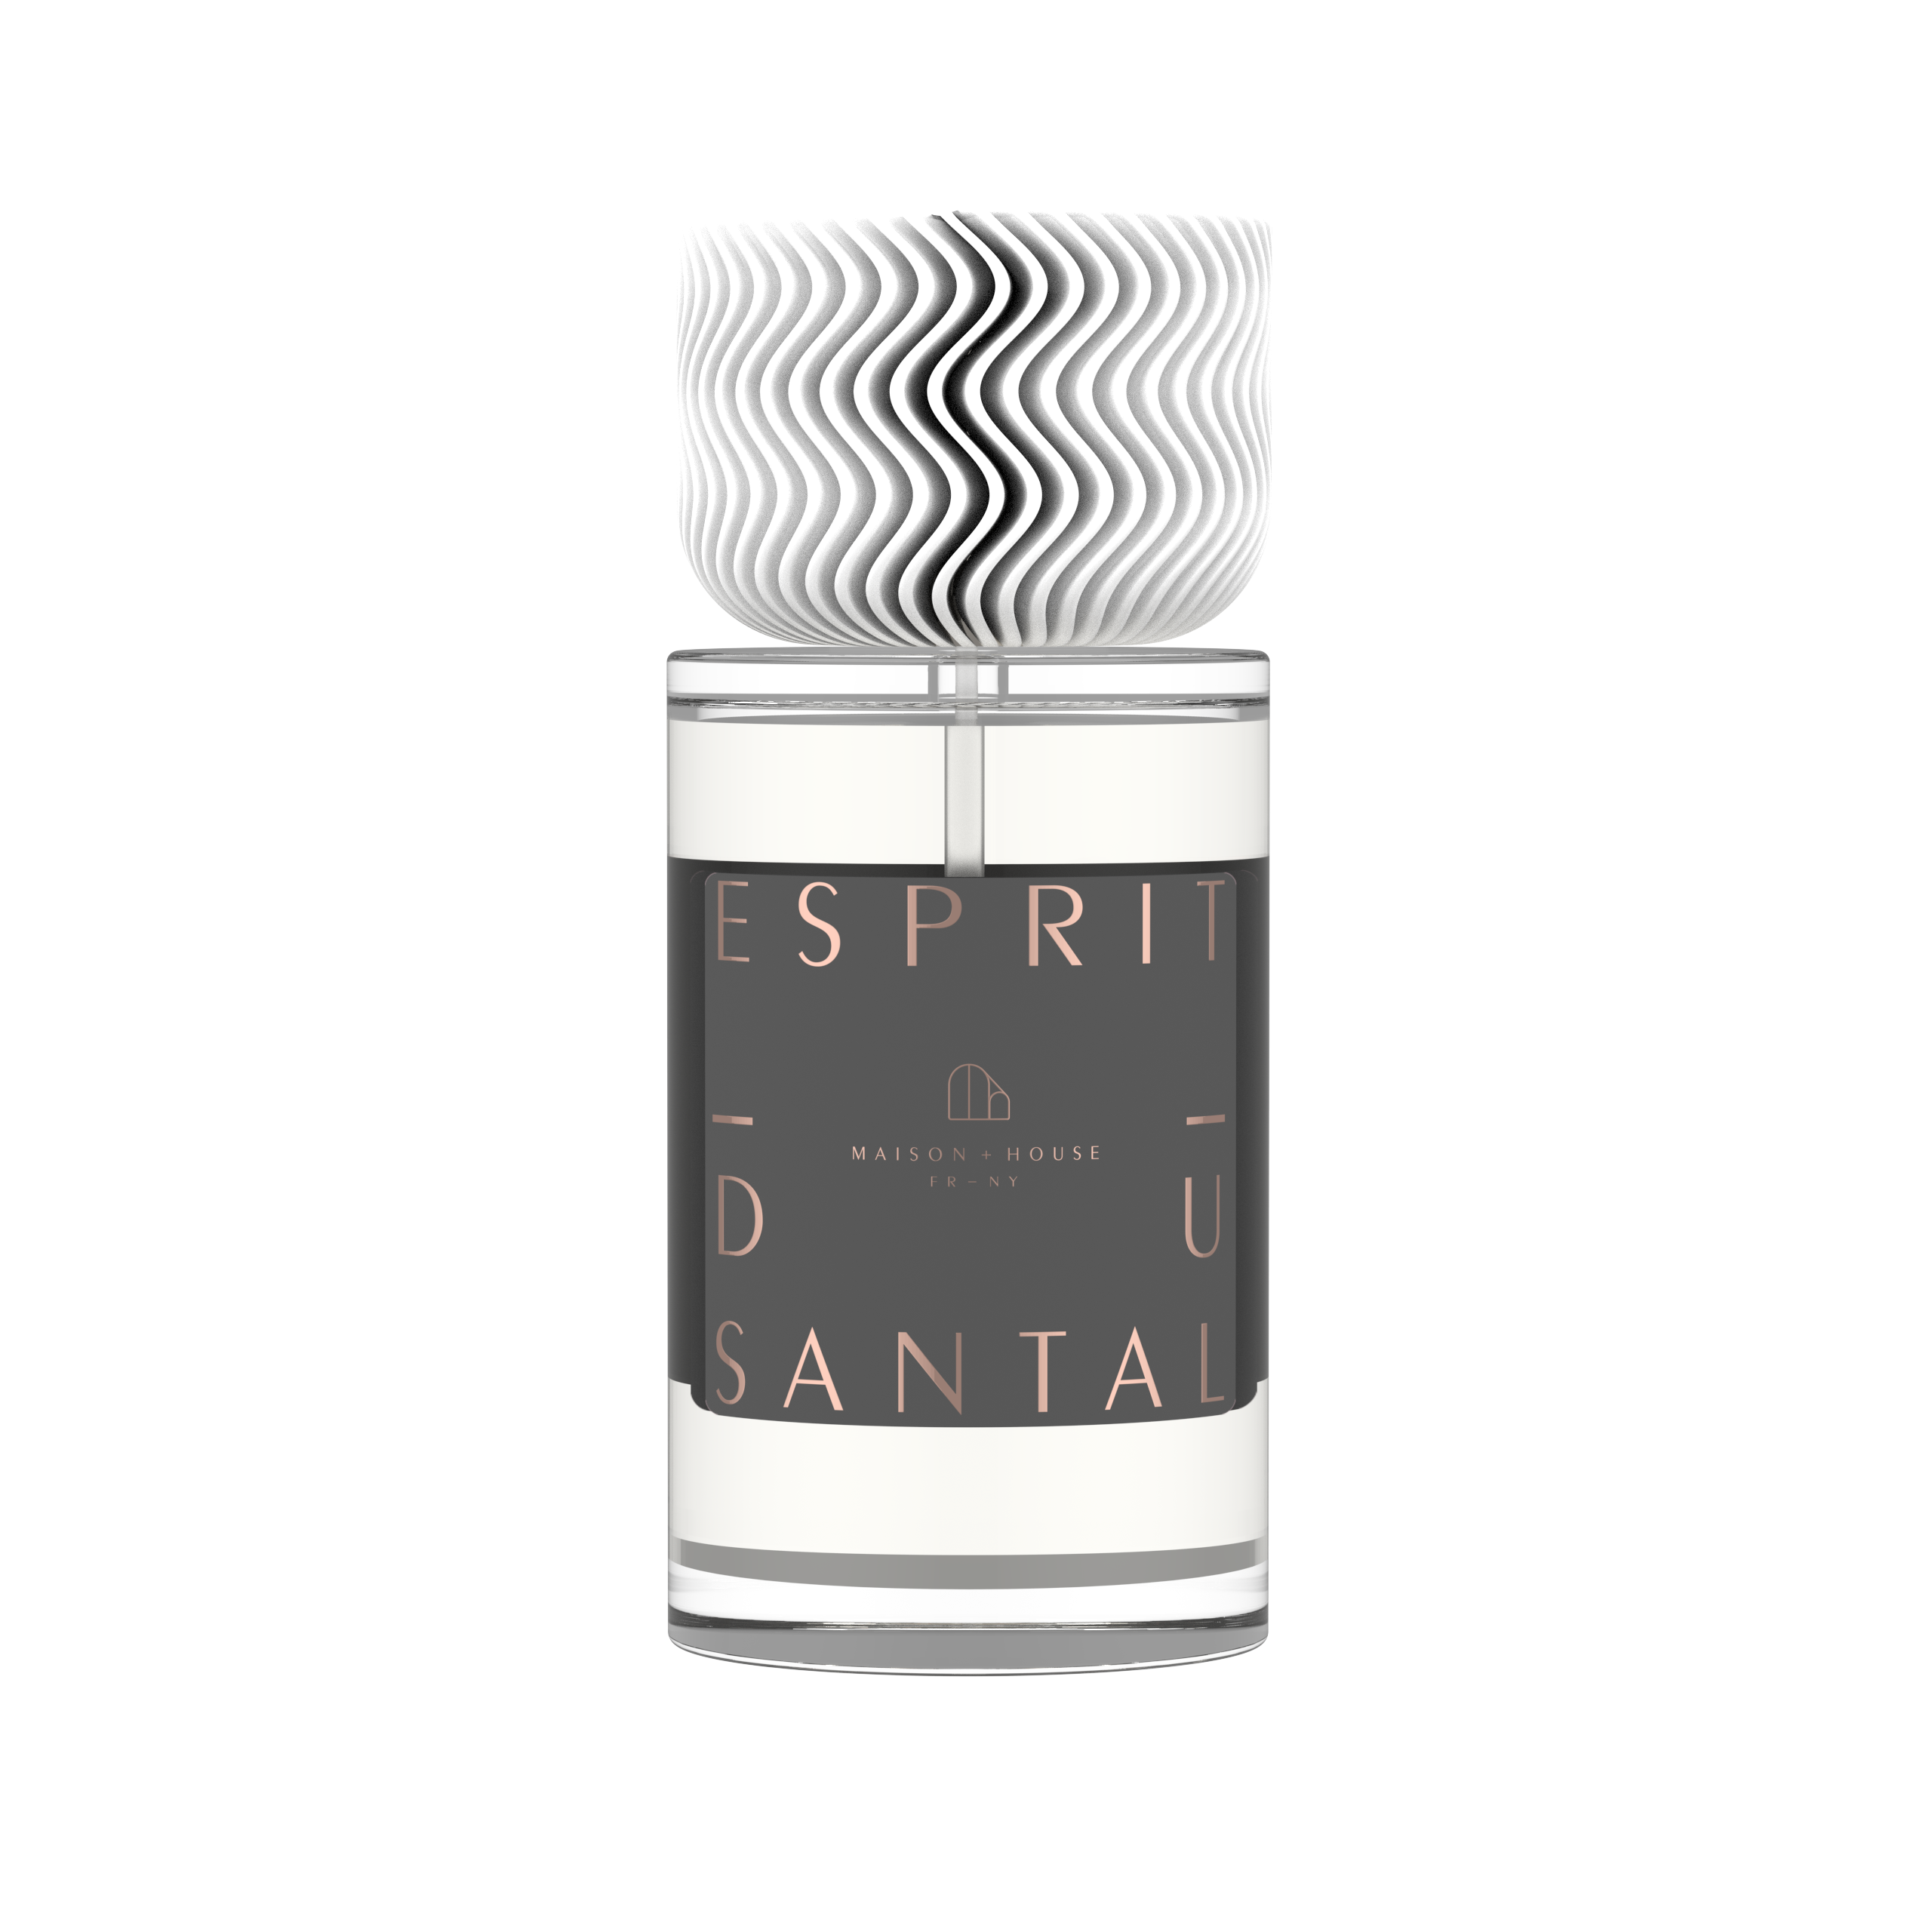 Esprit du Santal French-Fragrance Room / Linen Spray